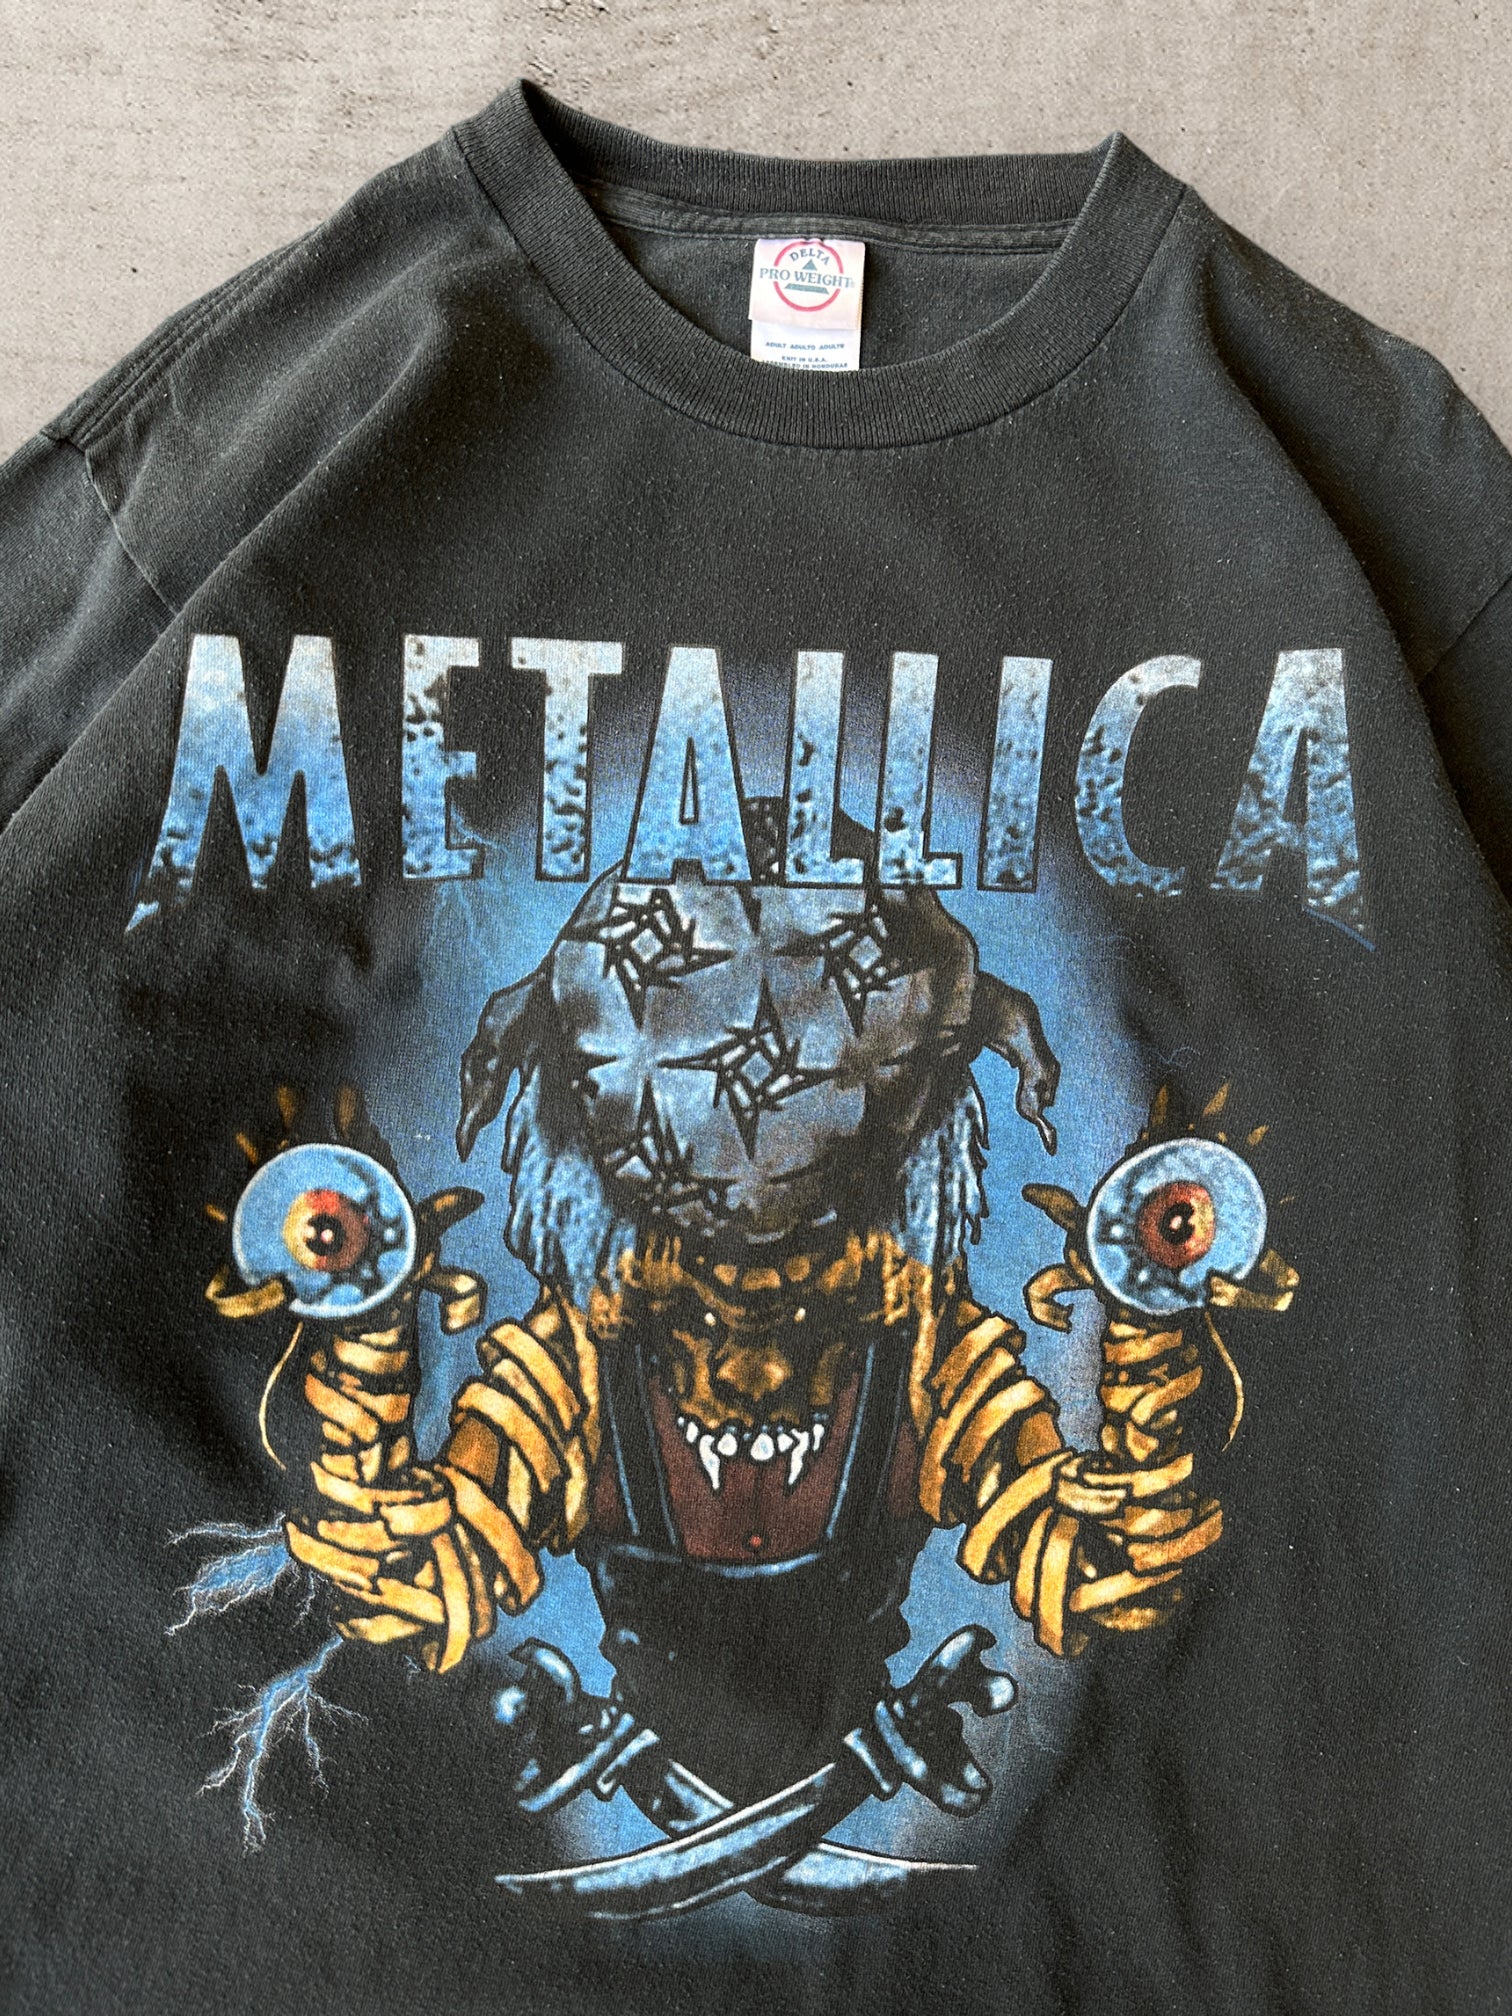 04 Metallic & Godsmack Tour Long Sleeve T-Shirt - Medium